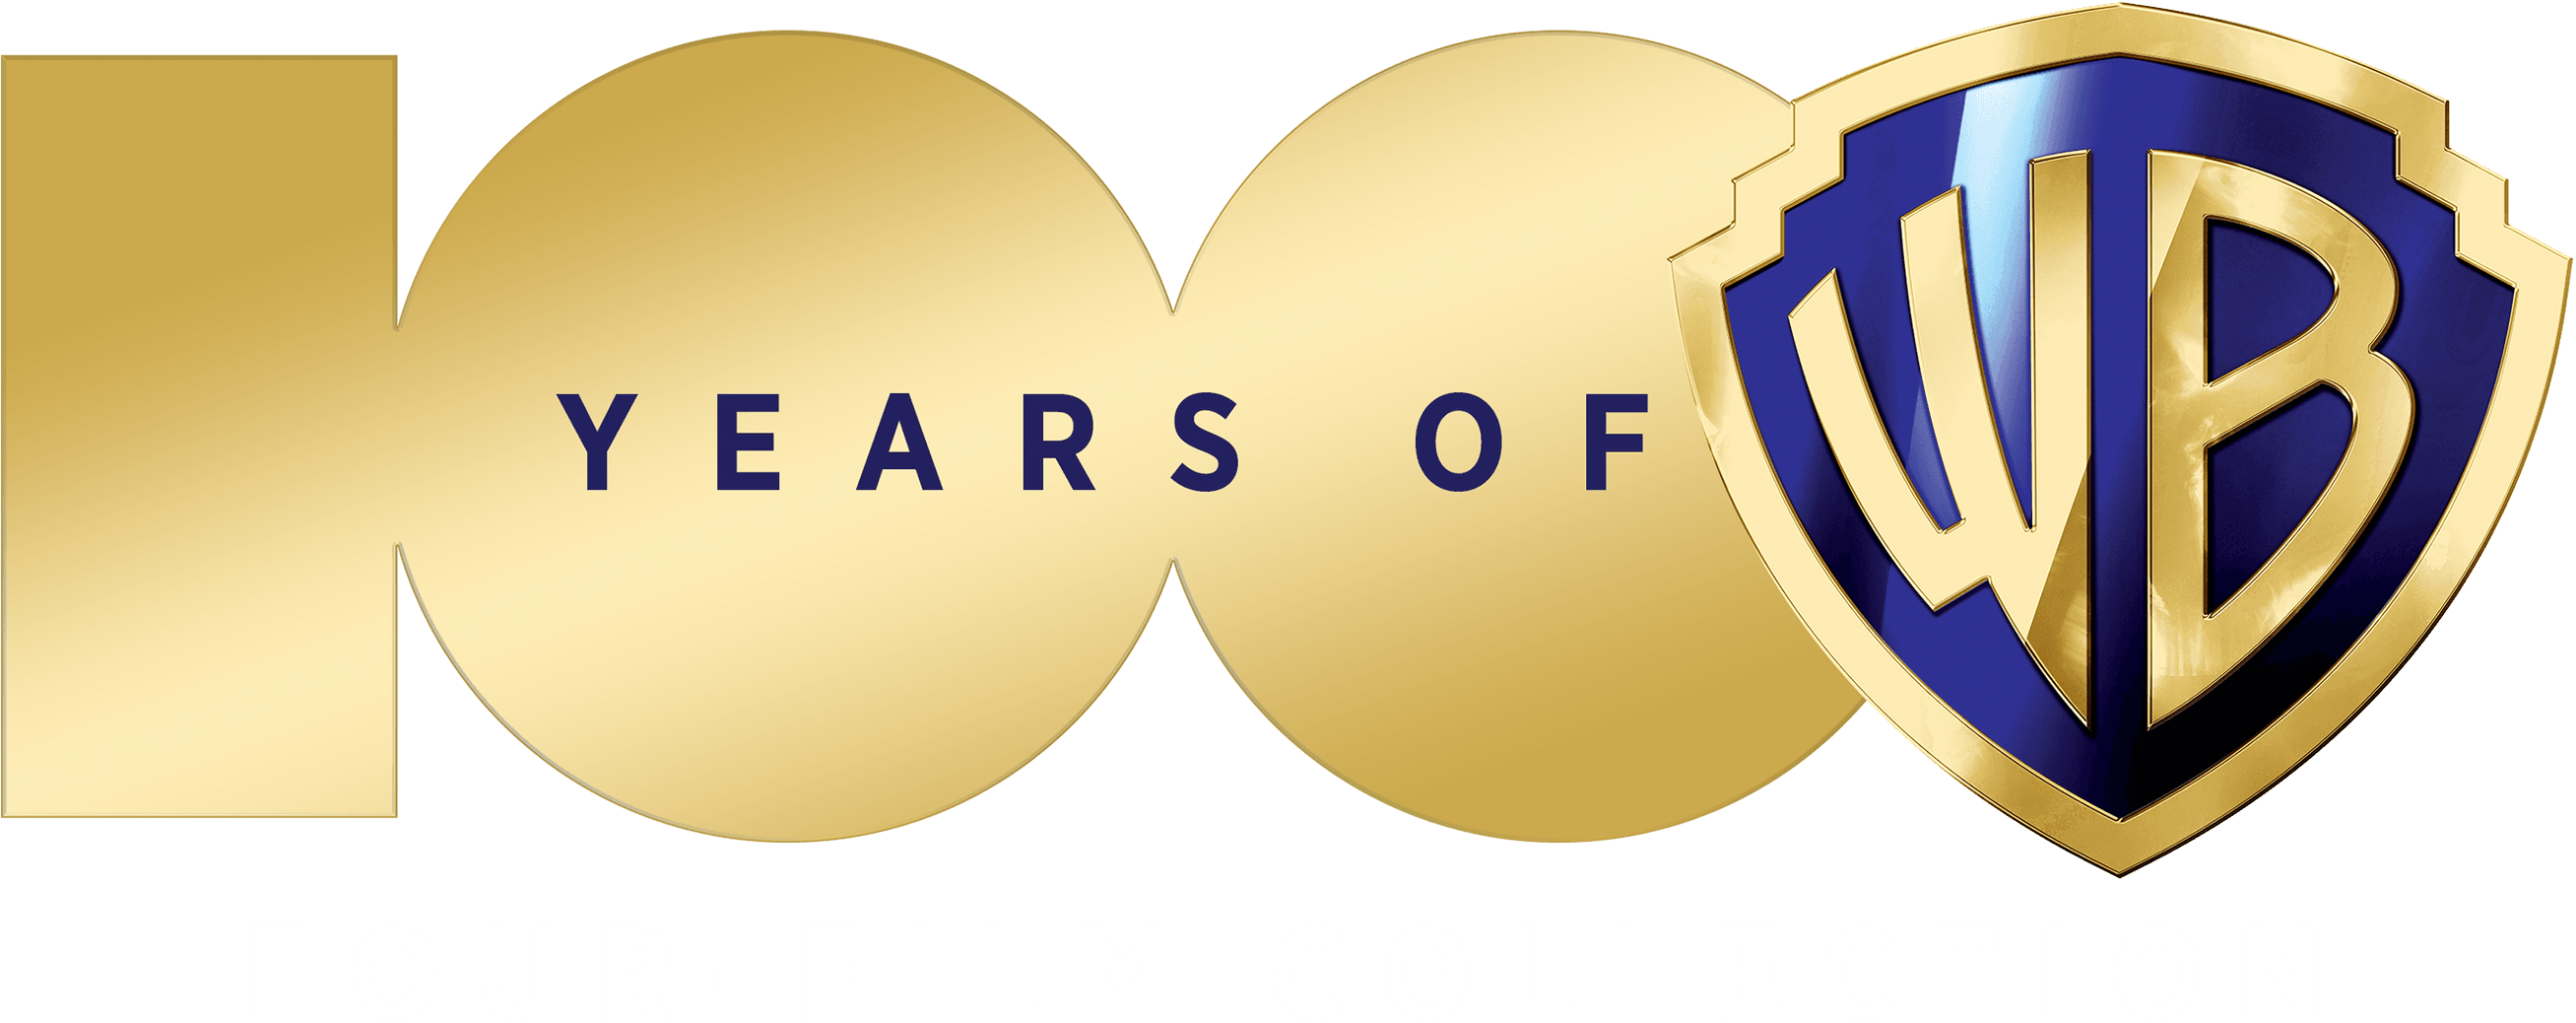 100 Years of Warner Bros. logo